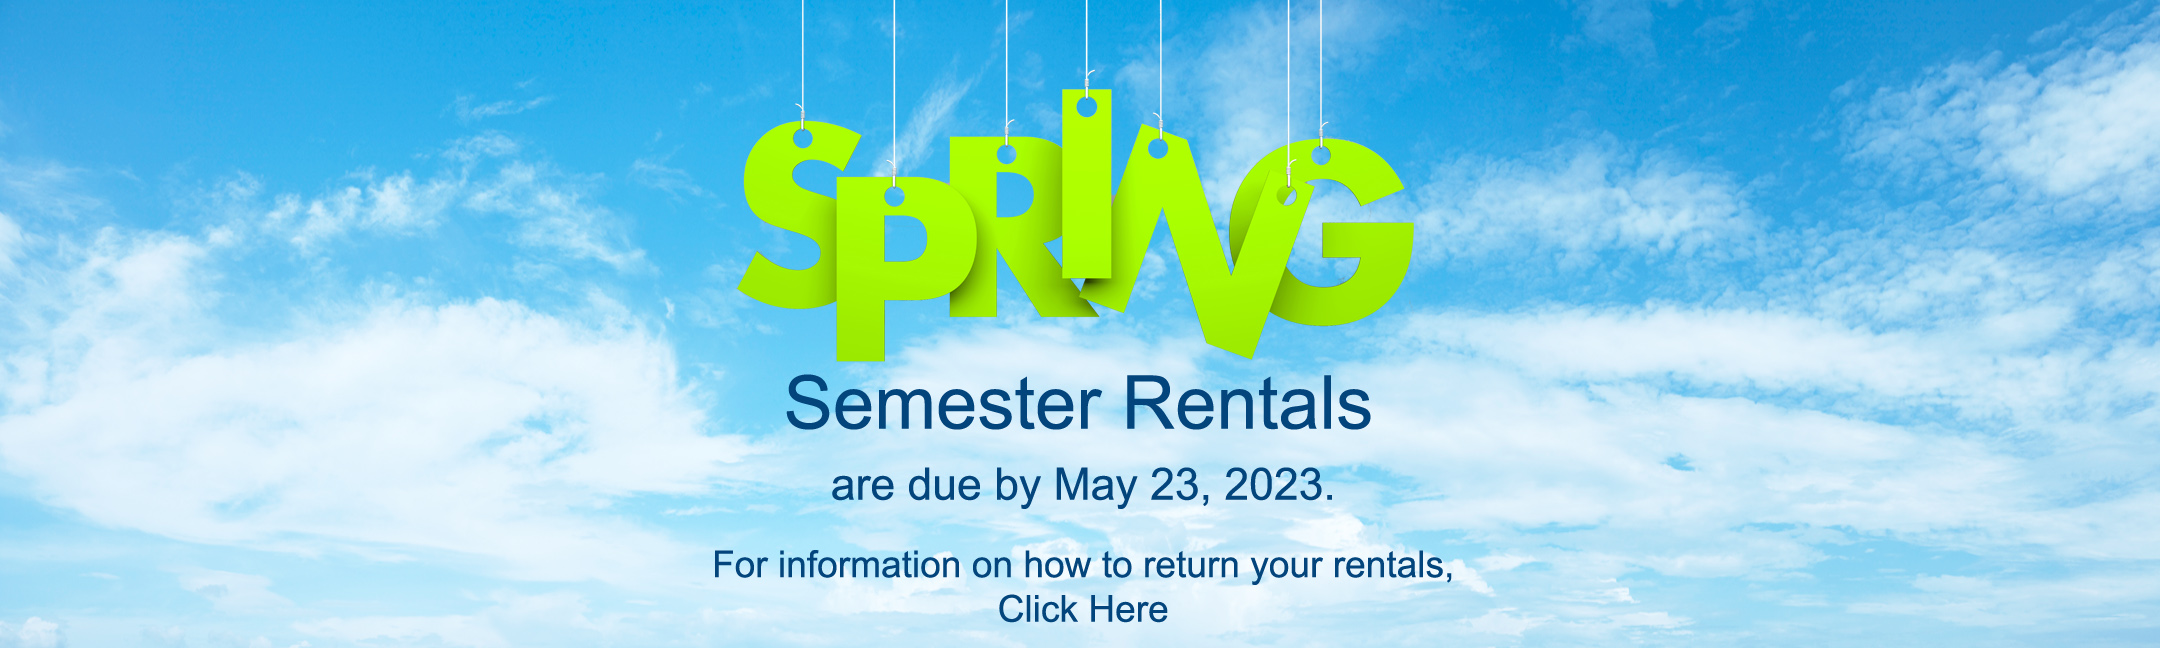 Spring Rentals due May 23rd